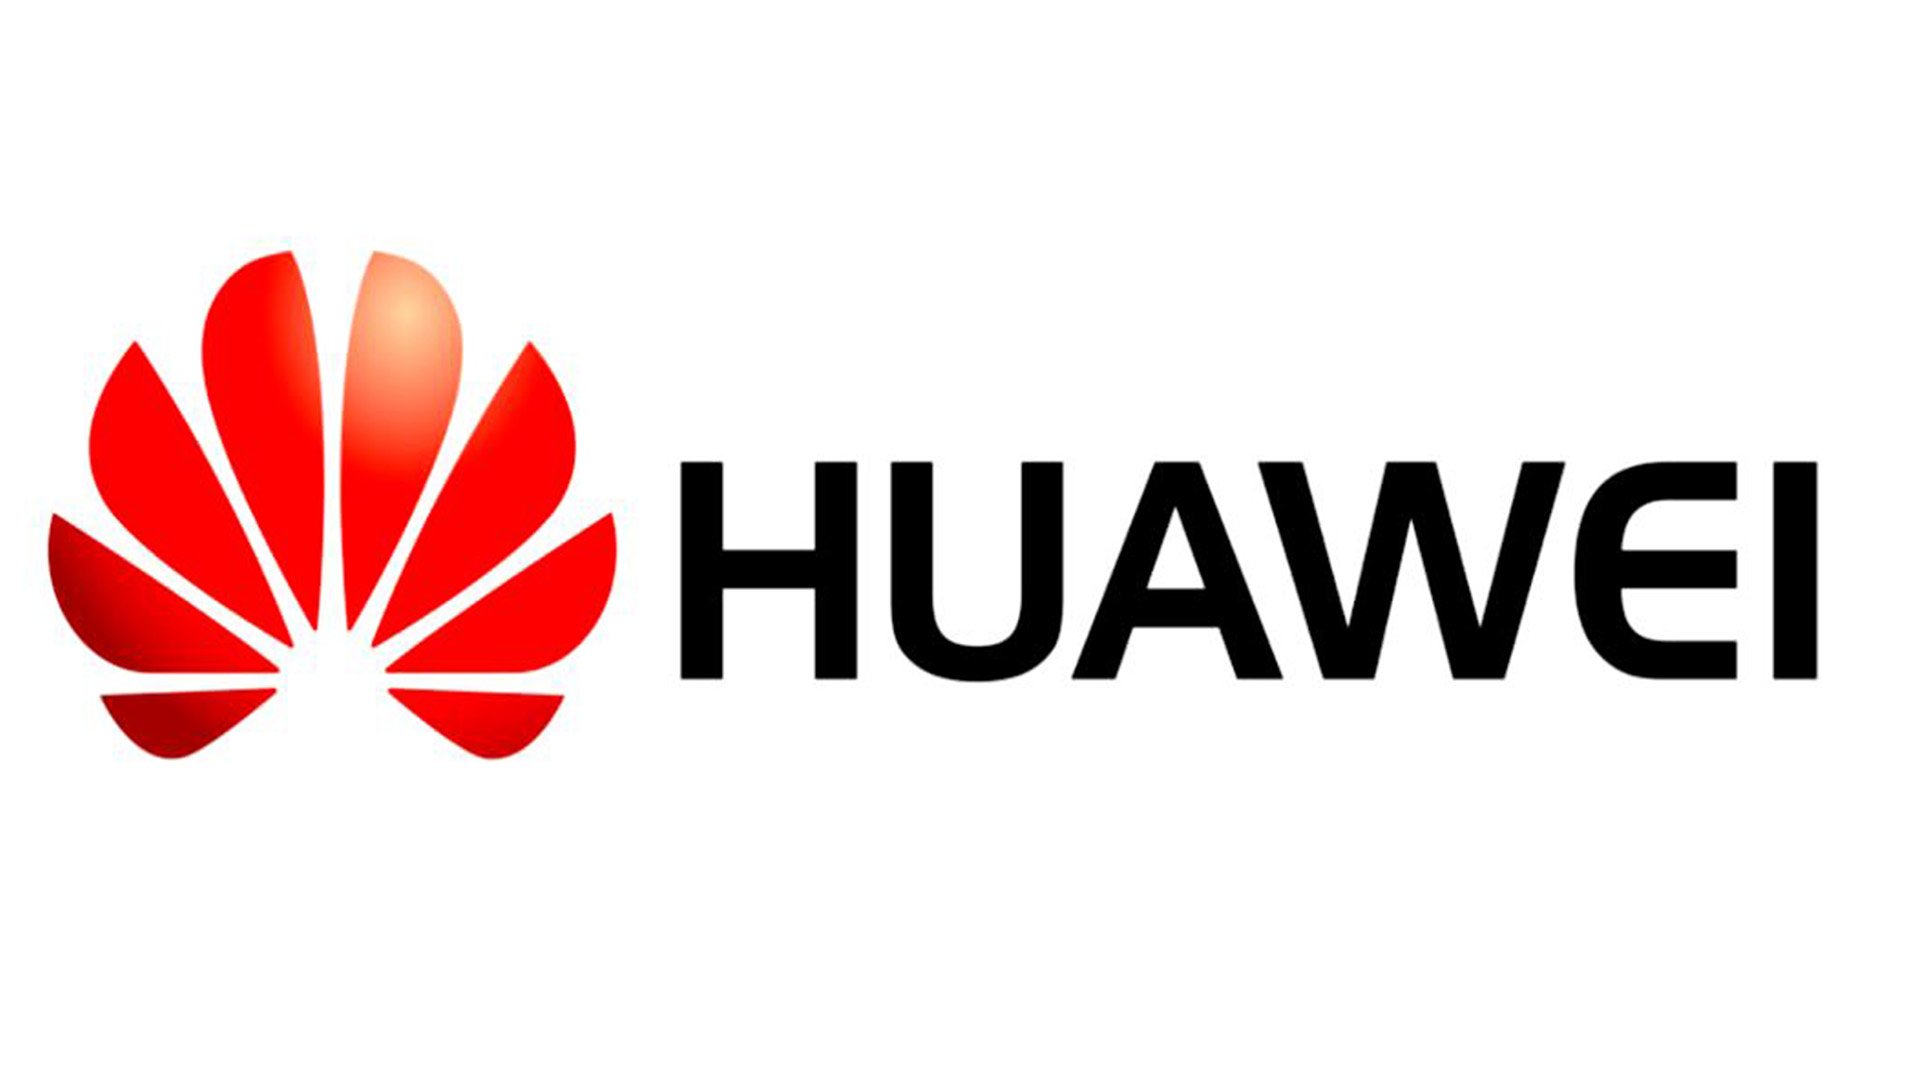 Huawei emblem